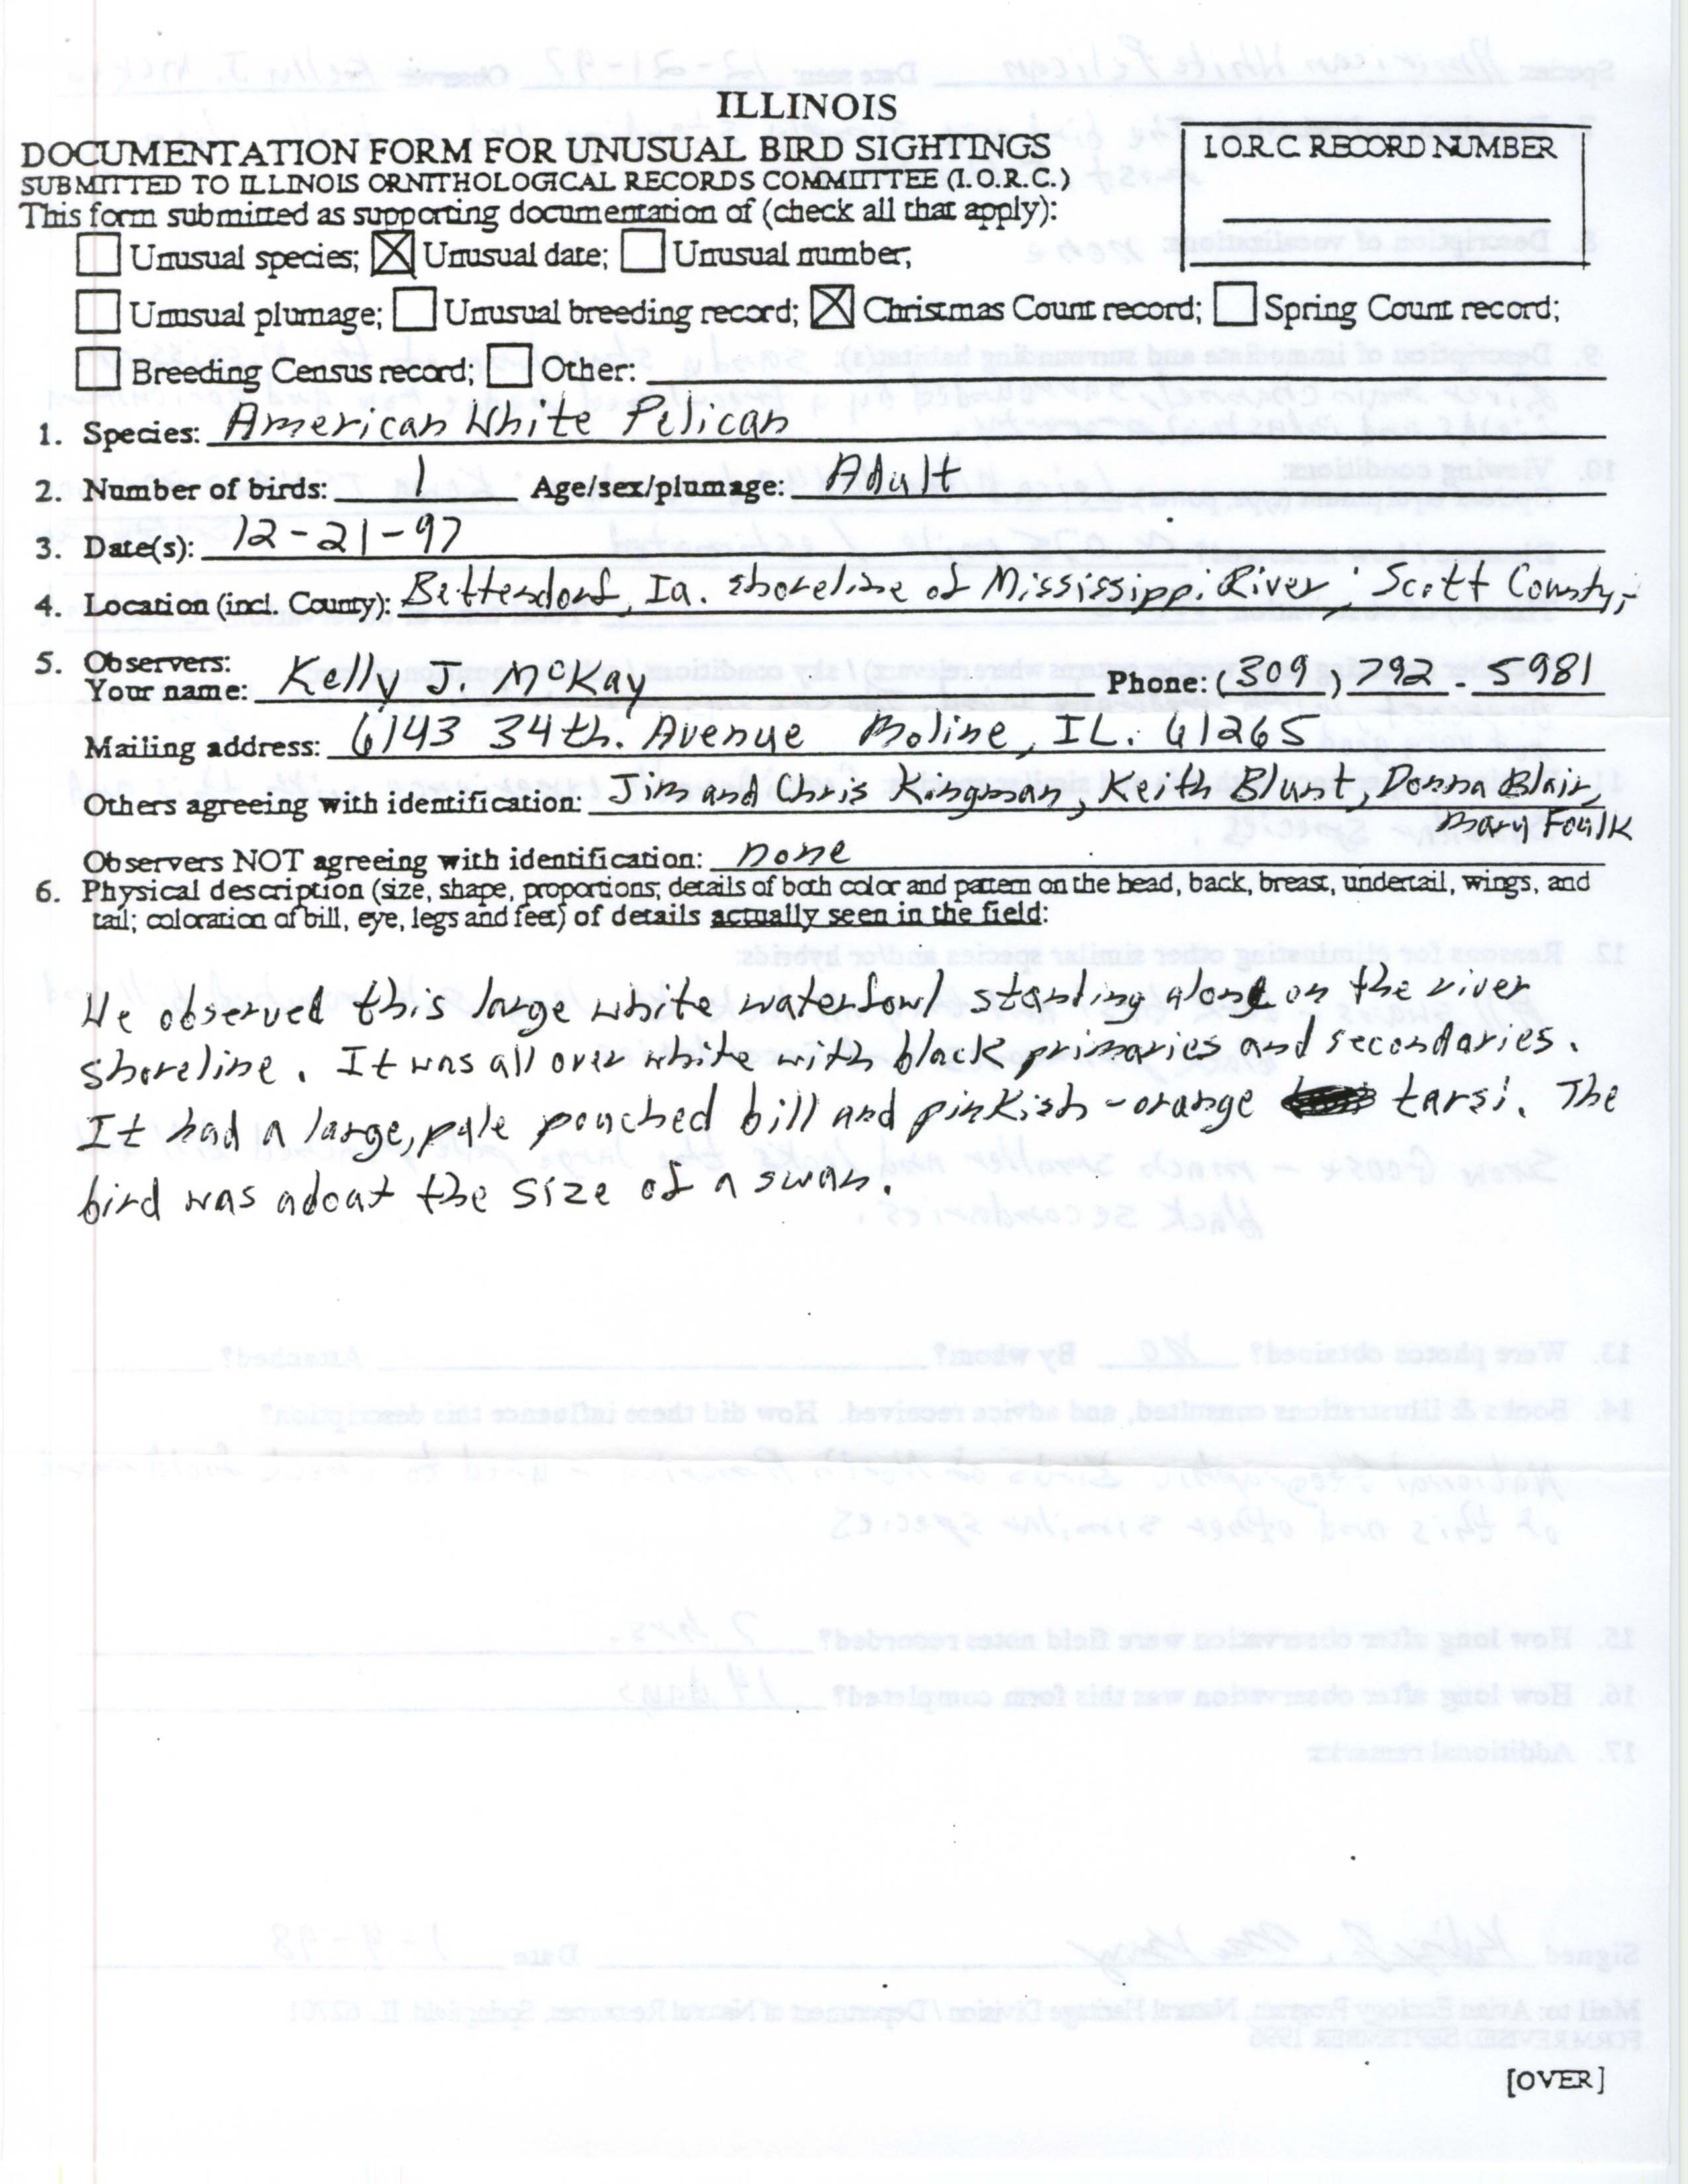 Rare bird documentation form for American White Pelican at Bettendorf, 1997